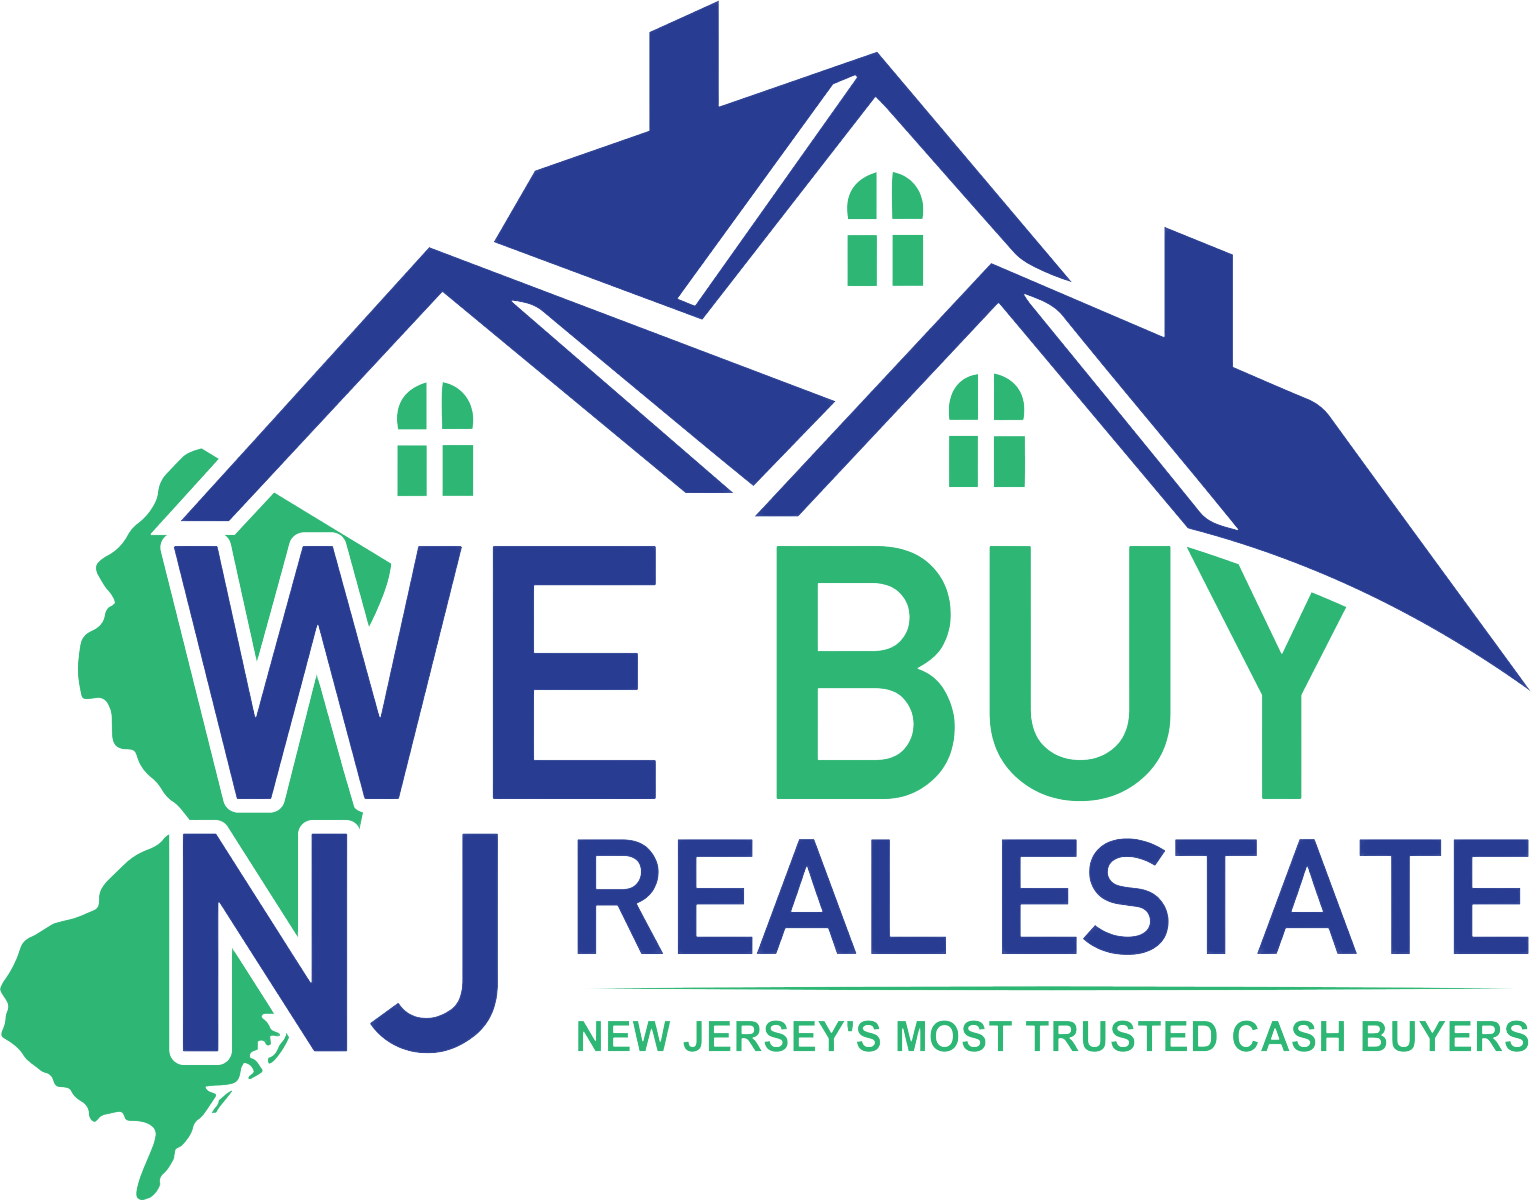 We Buy NJ Real Estate, LLC logo